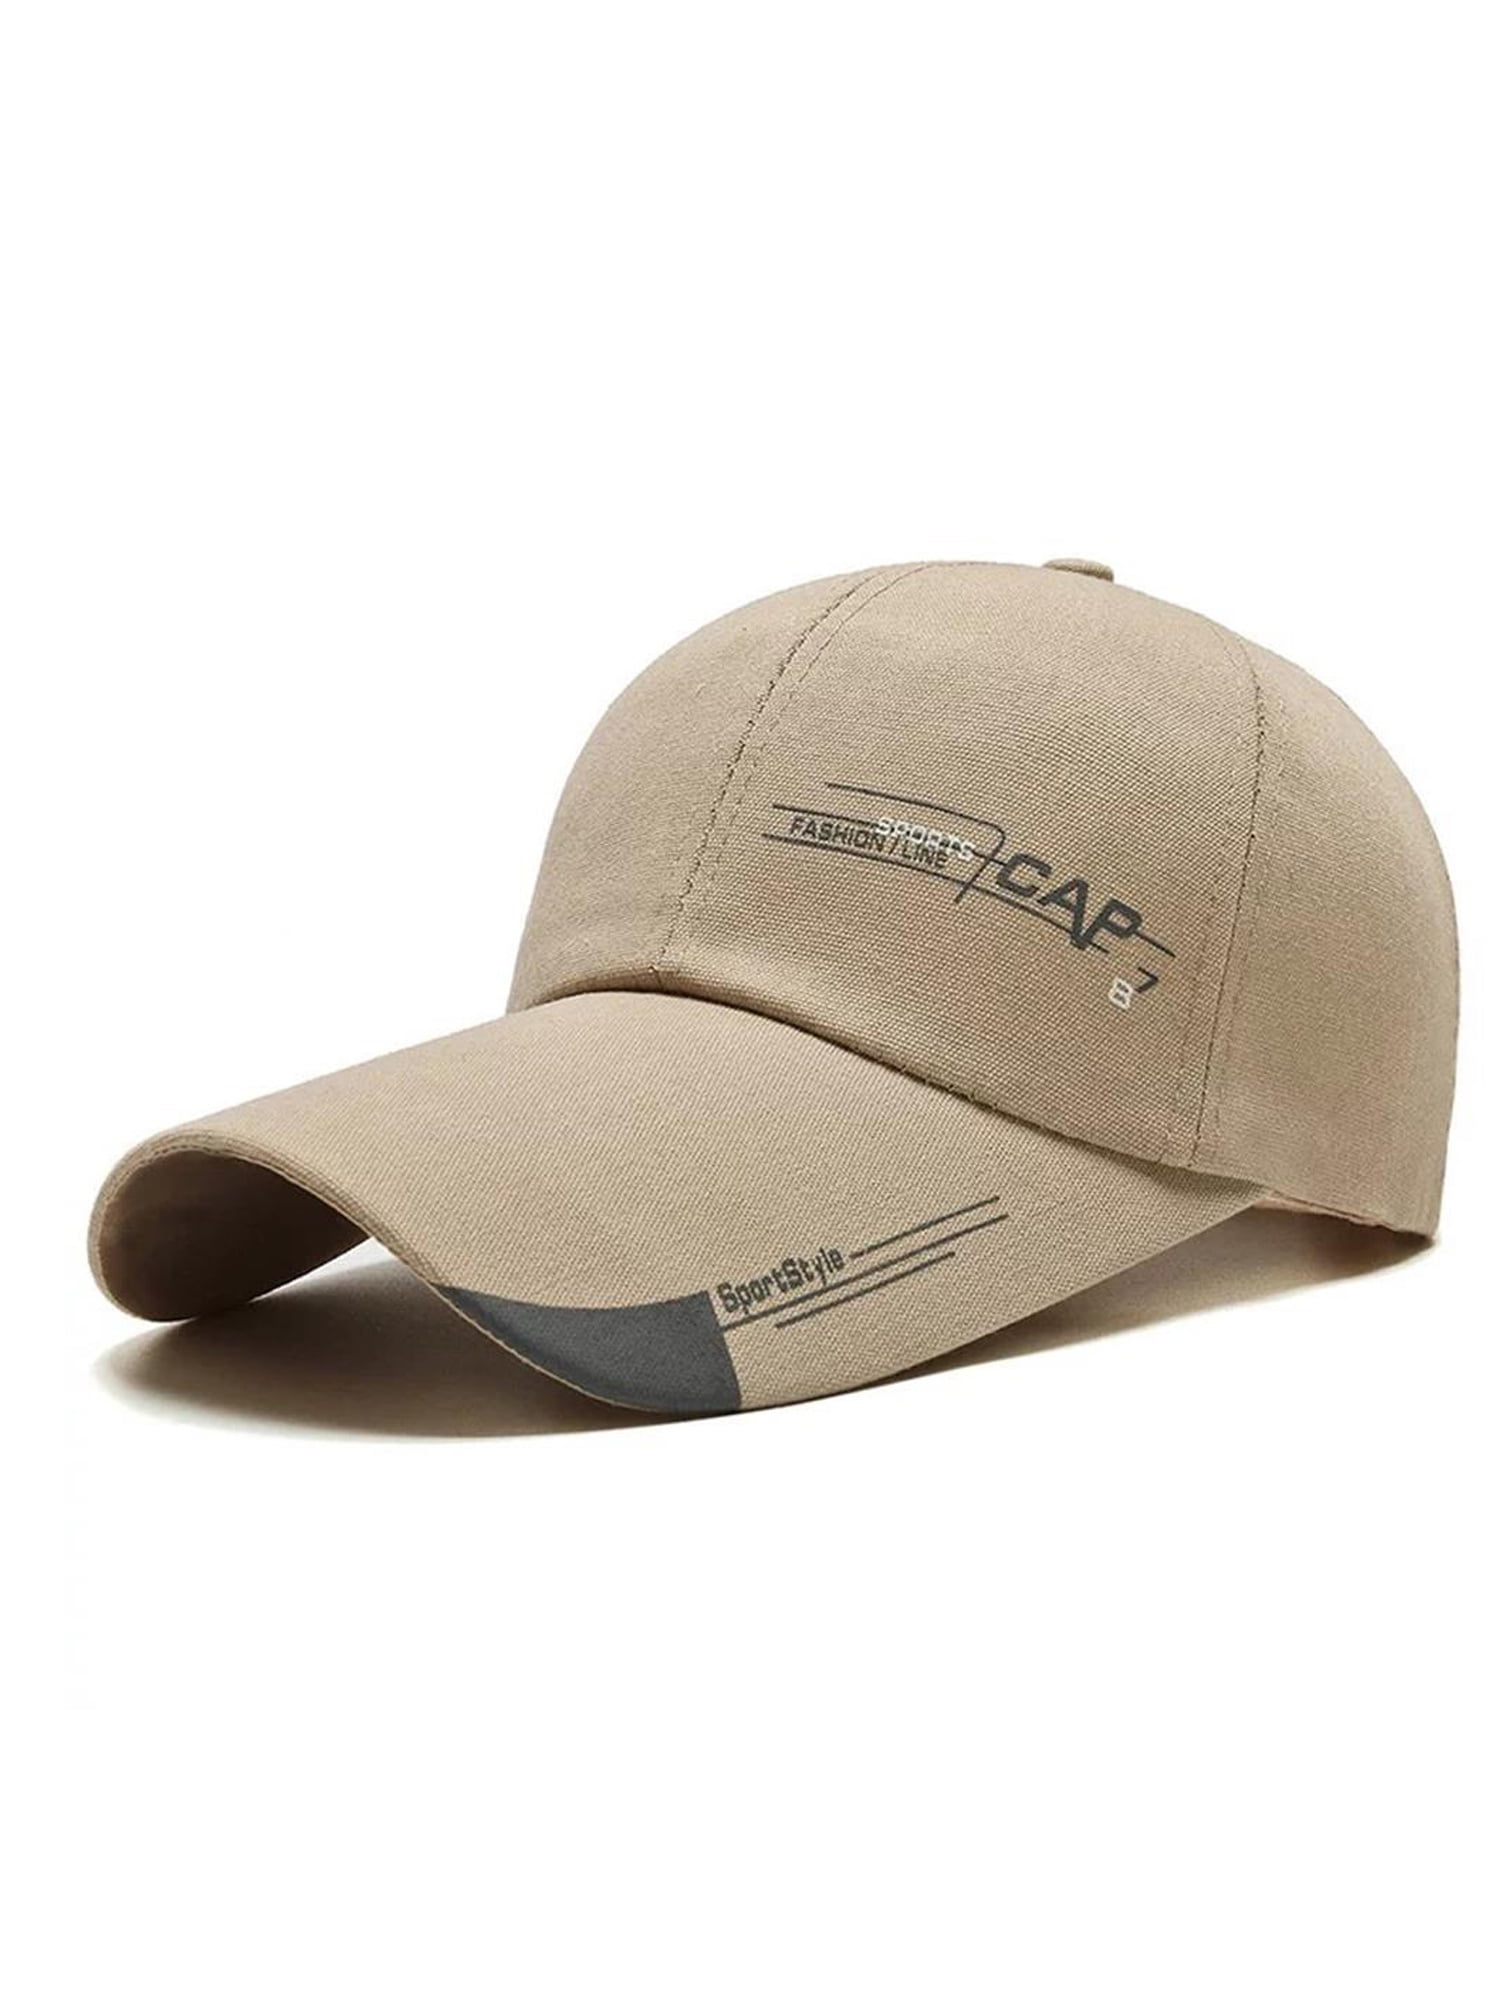 Adjustable Striped Baseball caps for Men Women Summer Sun hat Solid Casquette Gorras mesh Curved Trucker Cap